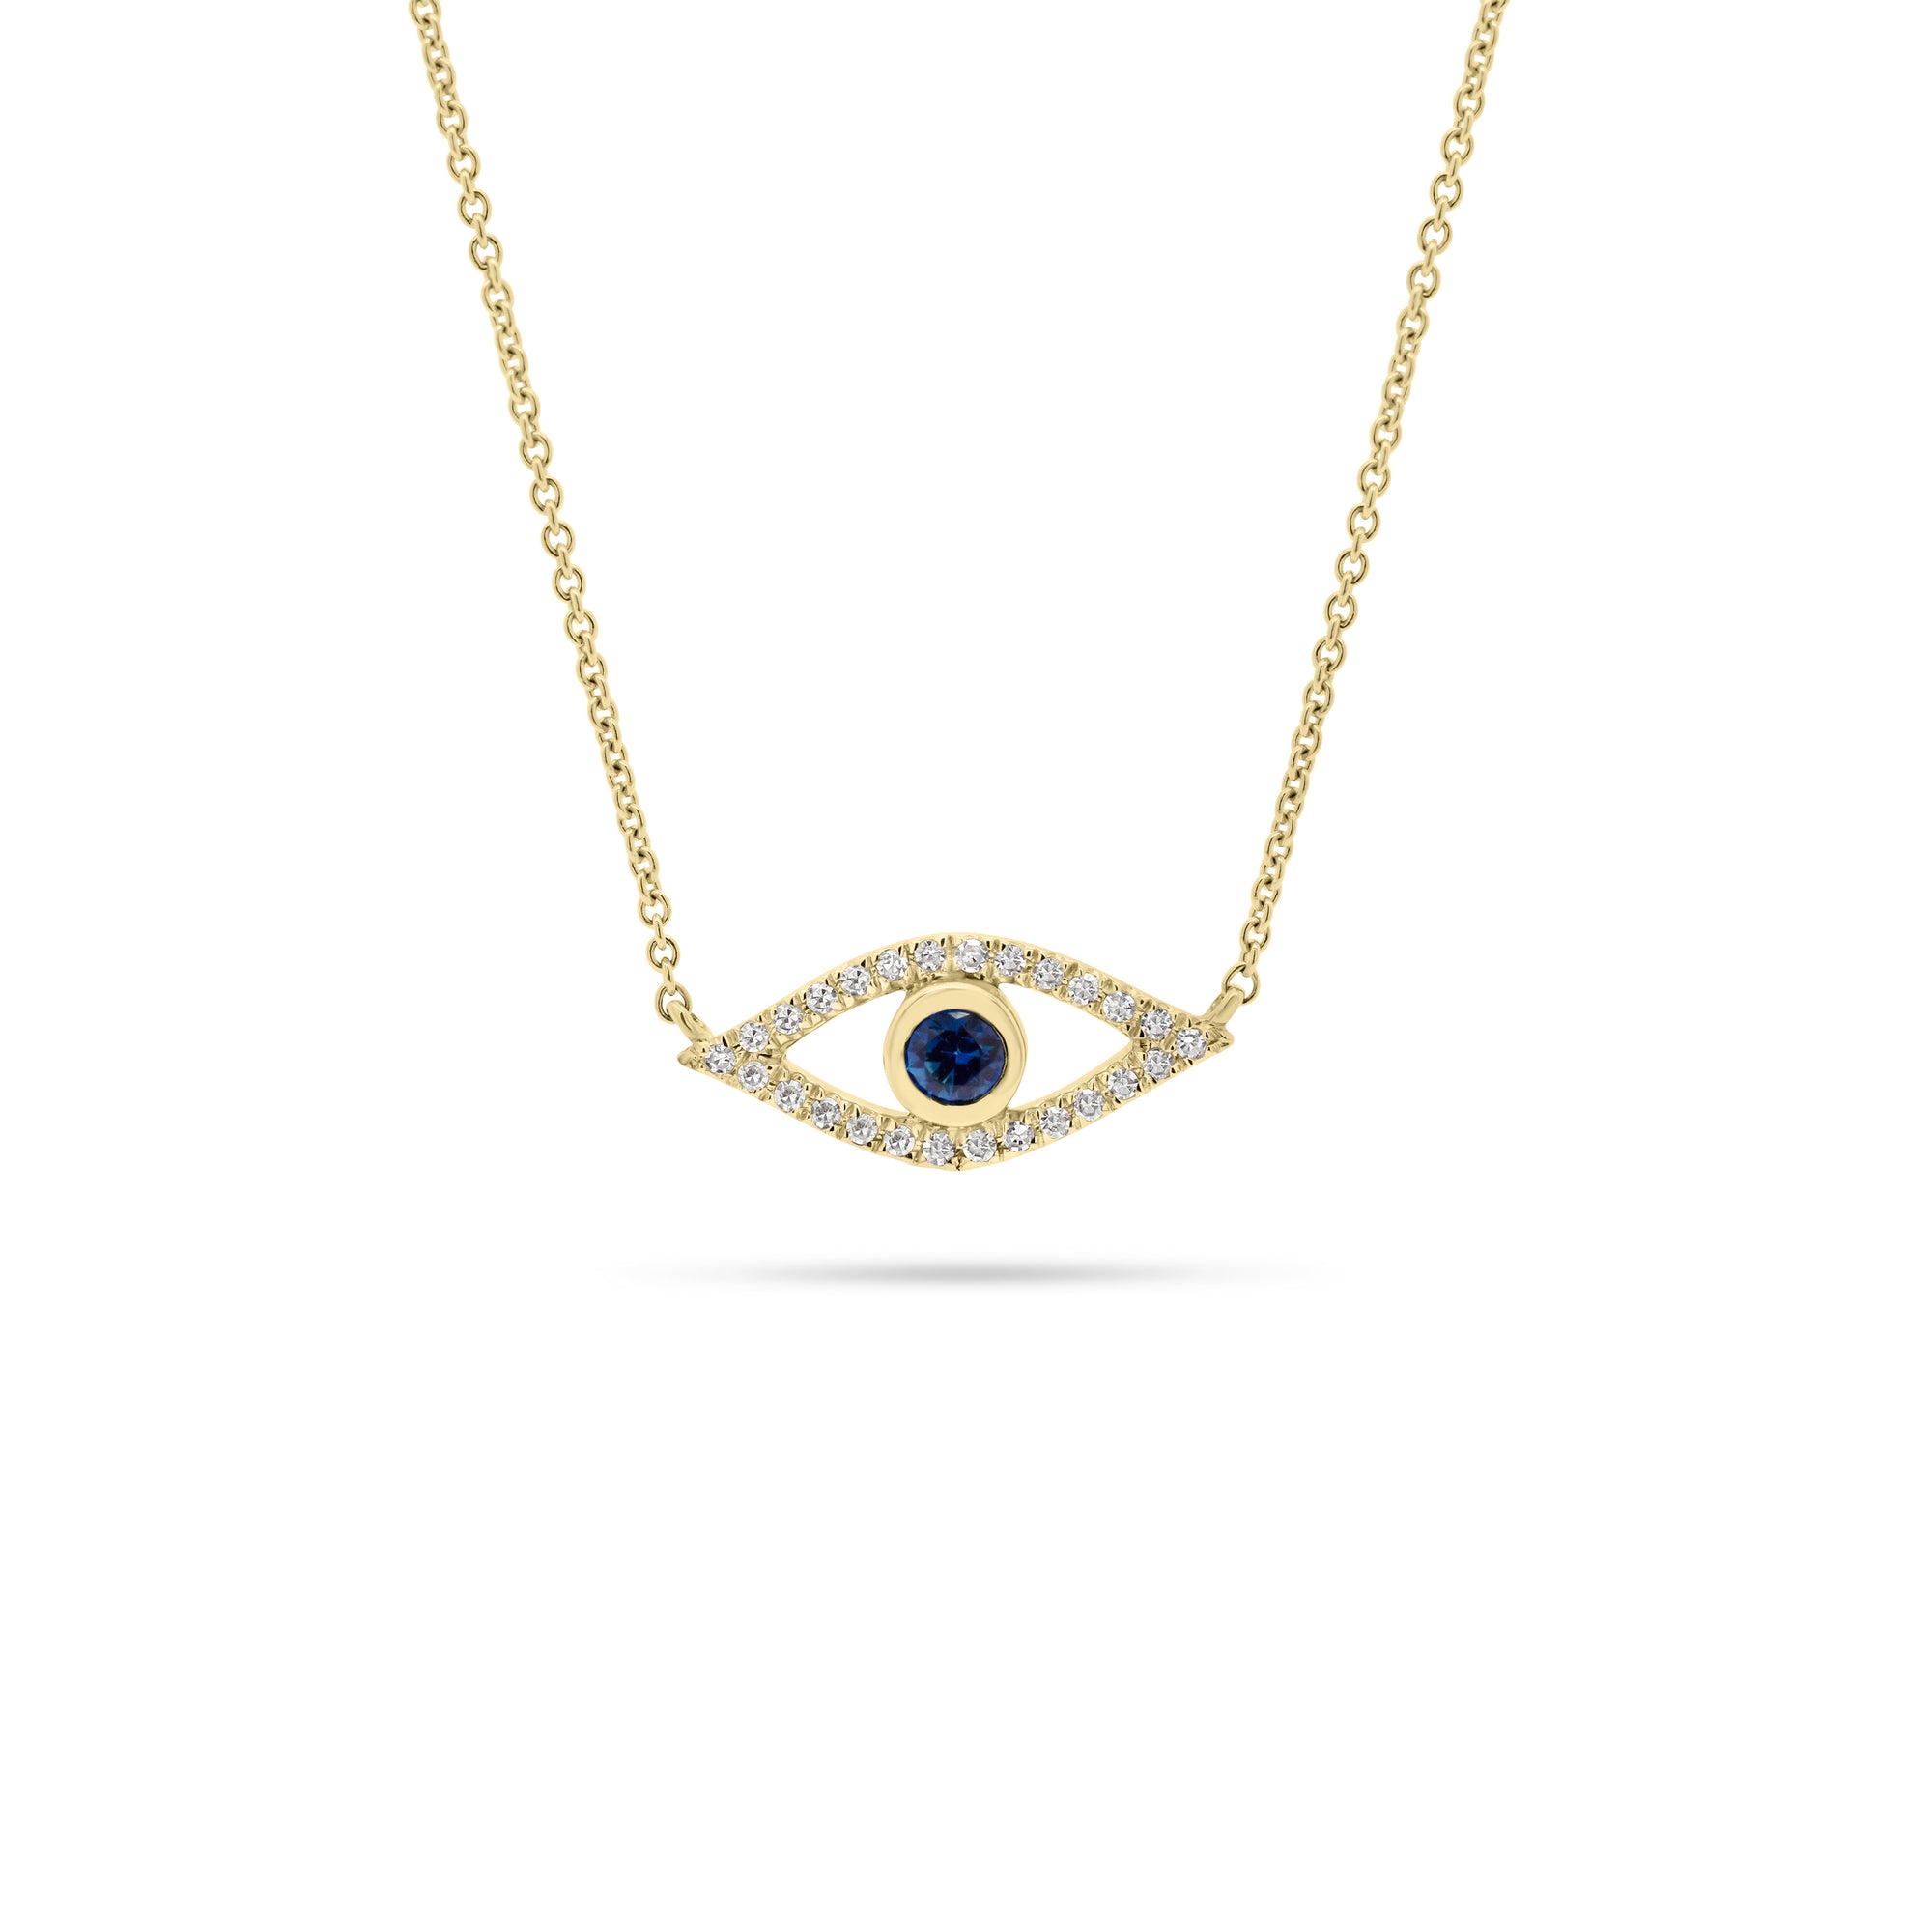 Sapphire & Diamond Open Evil Eye Pendant  - 14K yellow gold weighing 1.77 grams  - 26 round diamonds totaling 0.07 carats  - 0.11 ct sapphire